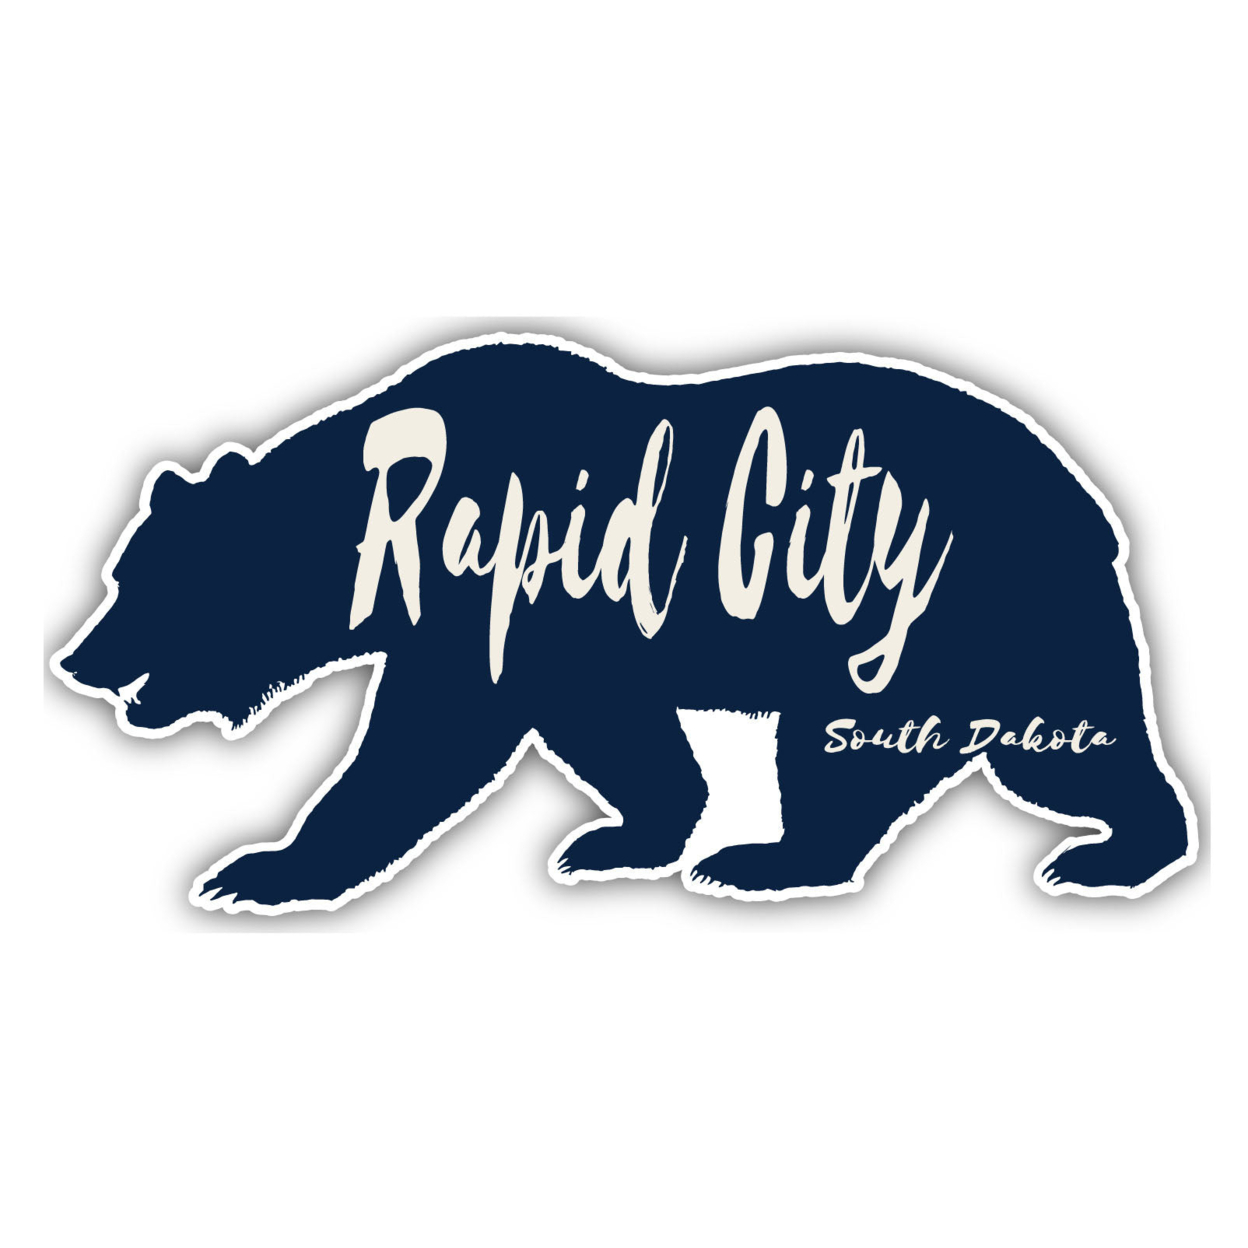 Rapid City South Dakota Souvenir Decorative Stickers (Choose Theme And Size) - Single Unit, 2-Inch, Adventures Awaits